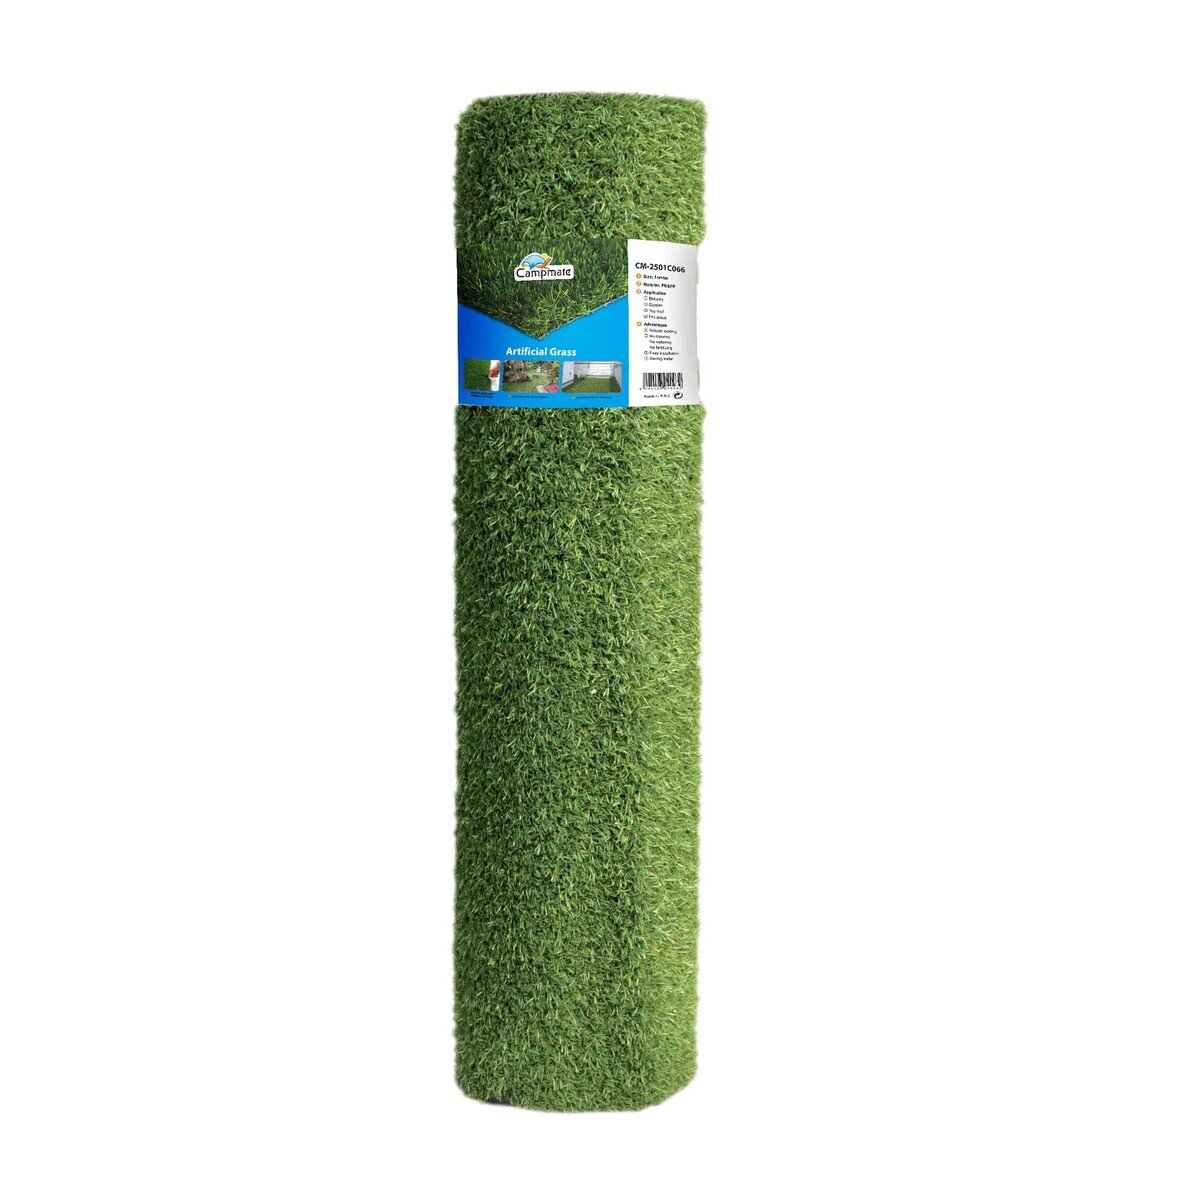 Campmate Artificial Grass, 1 x 4 m